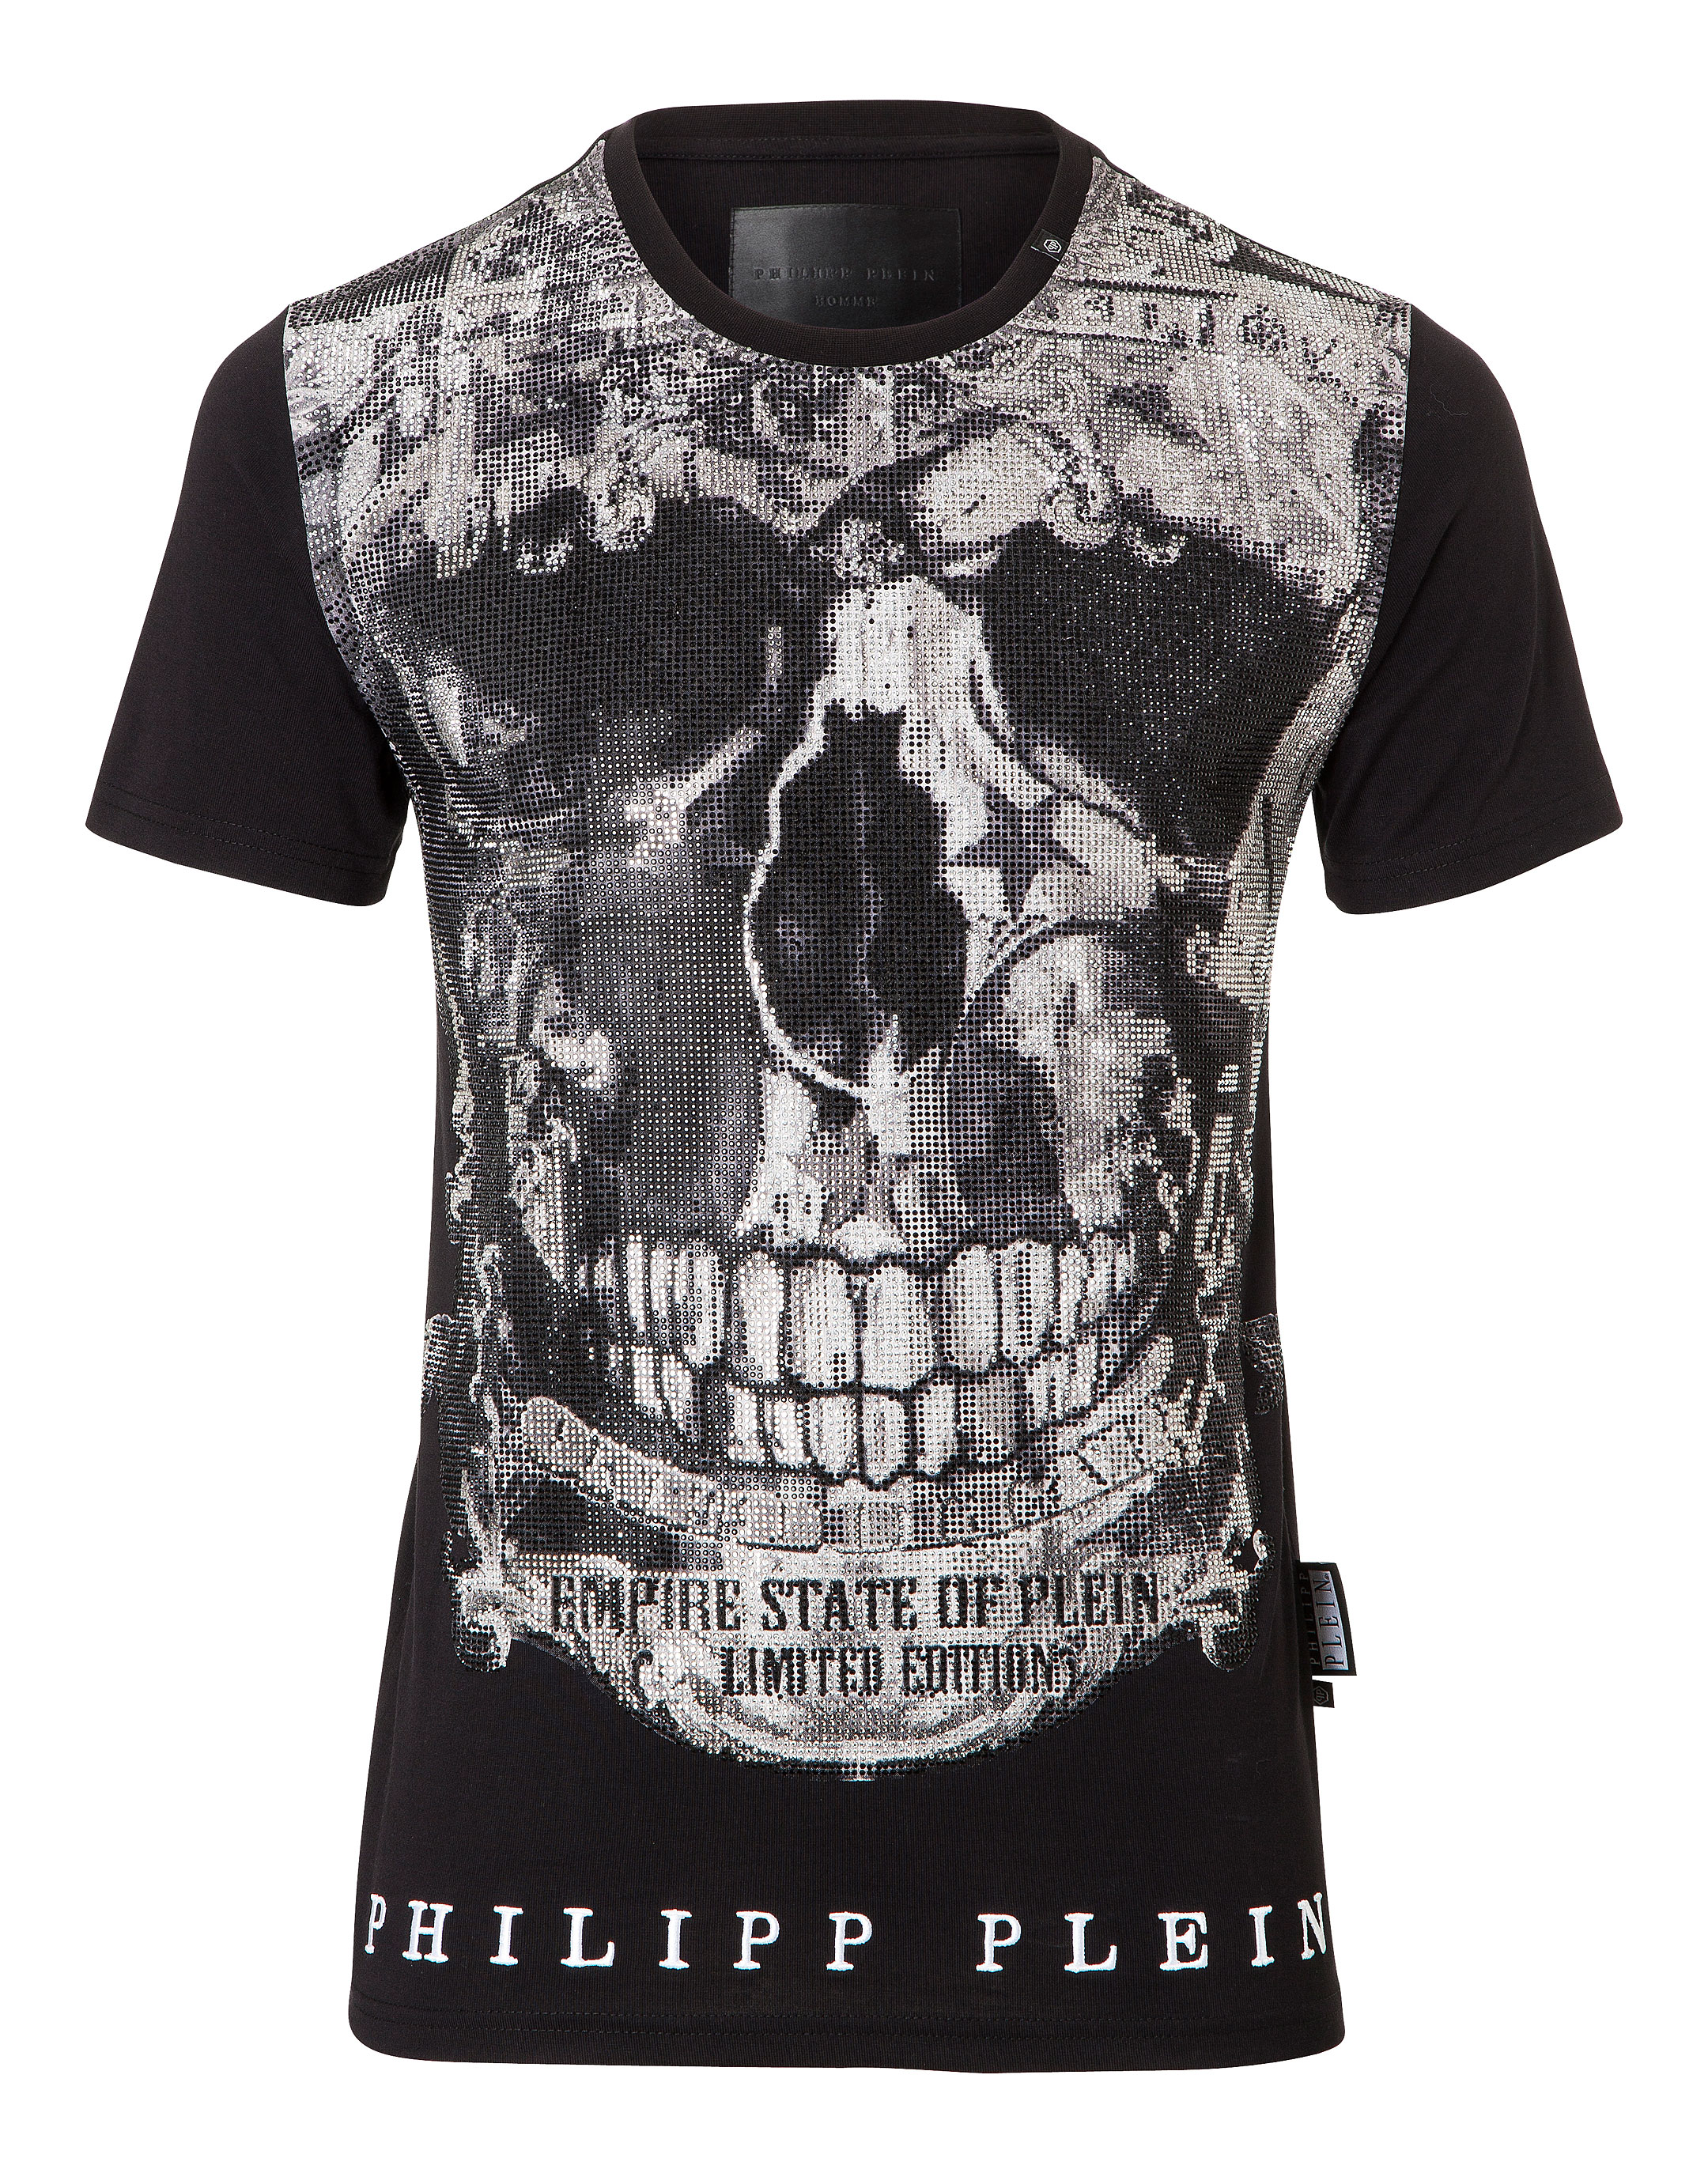 Philipp Plein Limited Edition Shirt Hot Sale, SAVE 33% - eagleflair.com